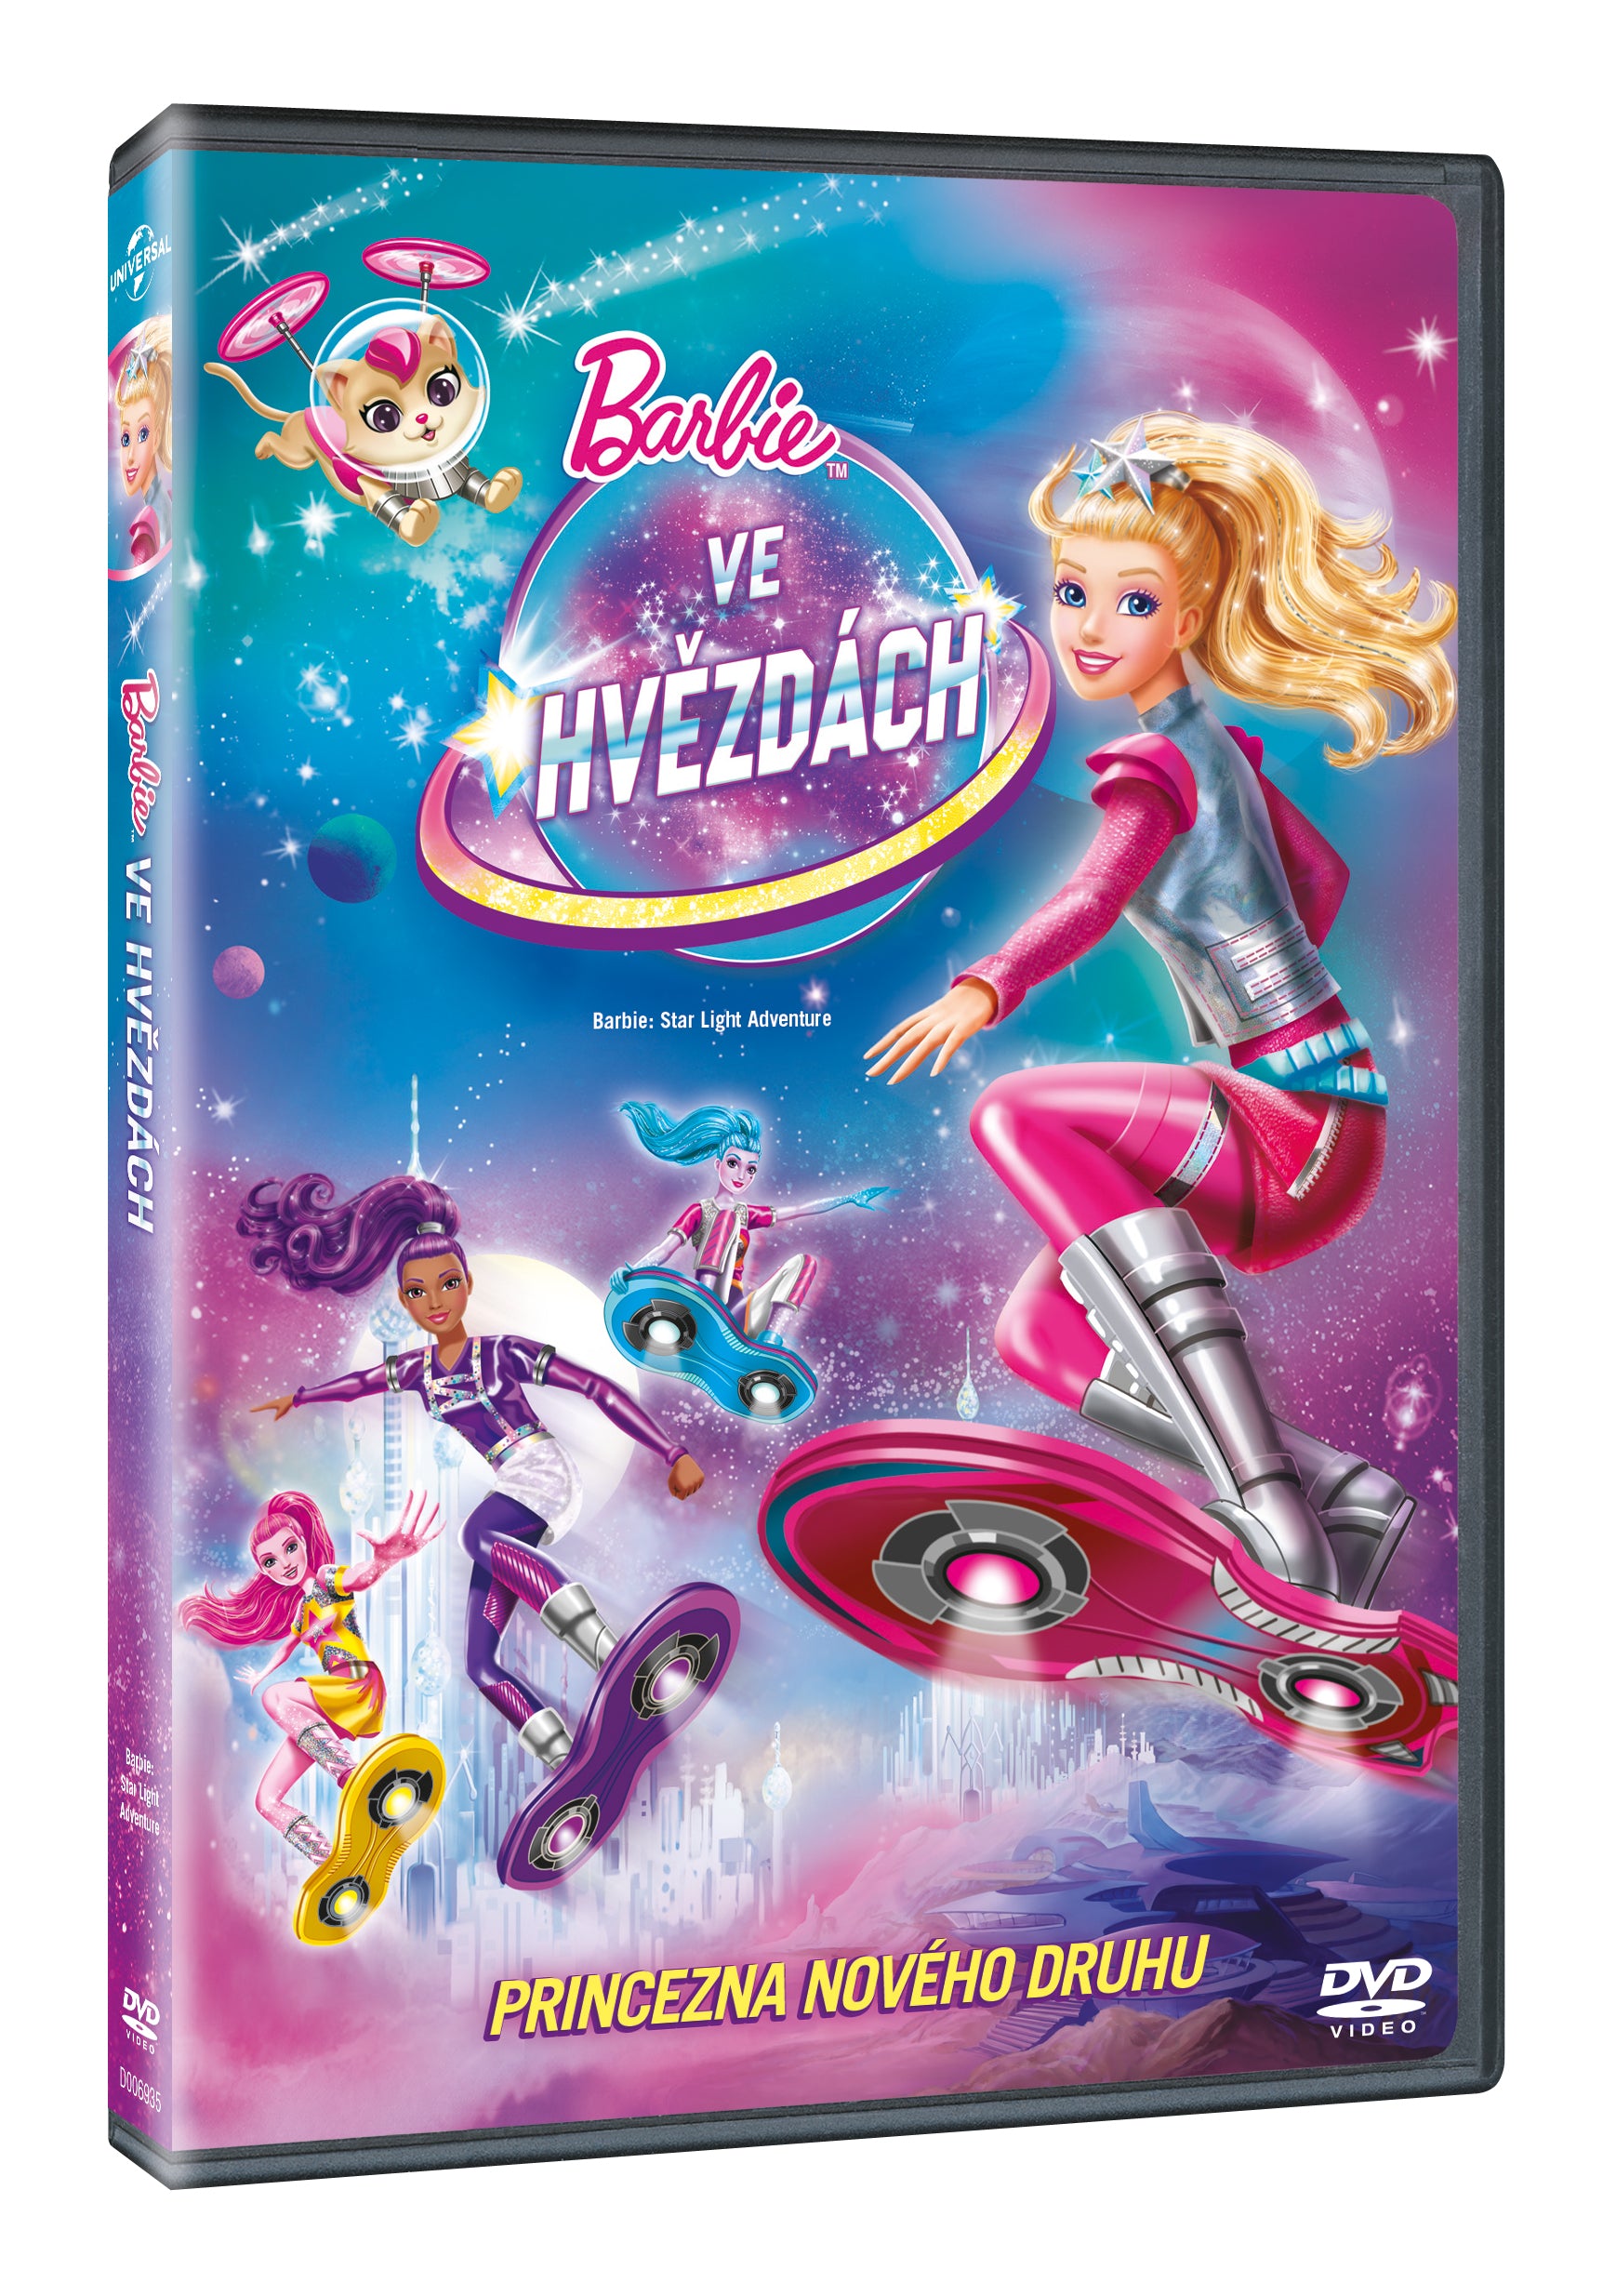 Barbie: Ve hvezdach DVD / Barbie: Star Light Adventure